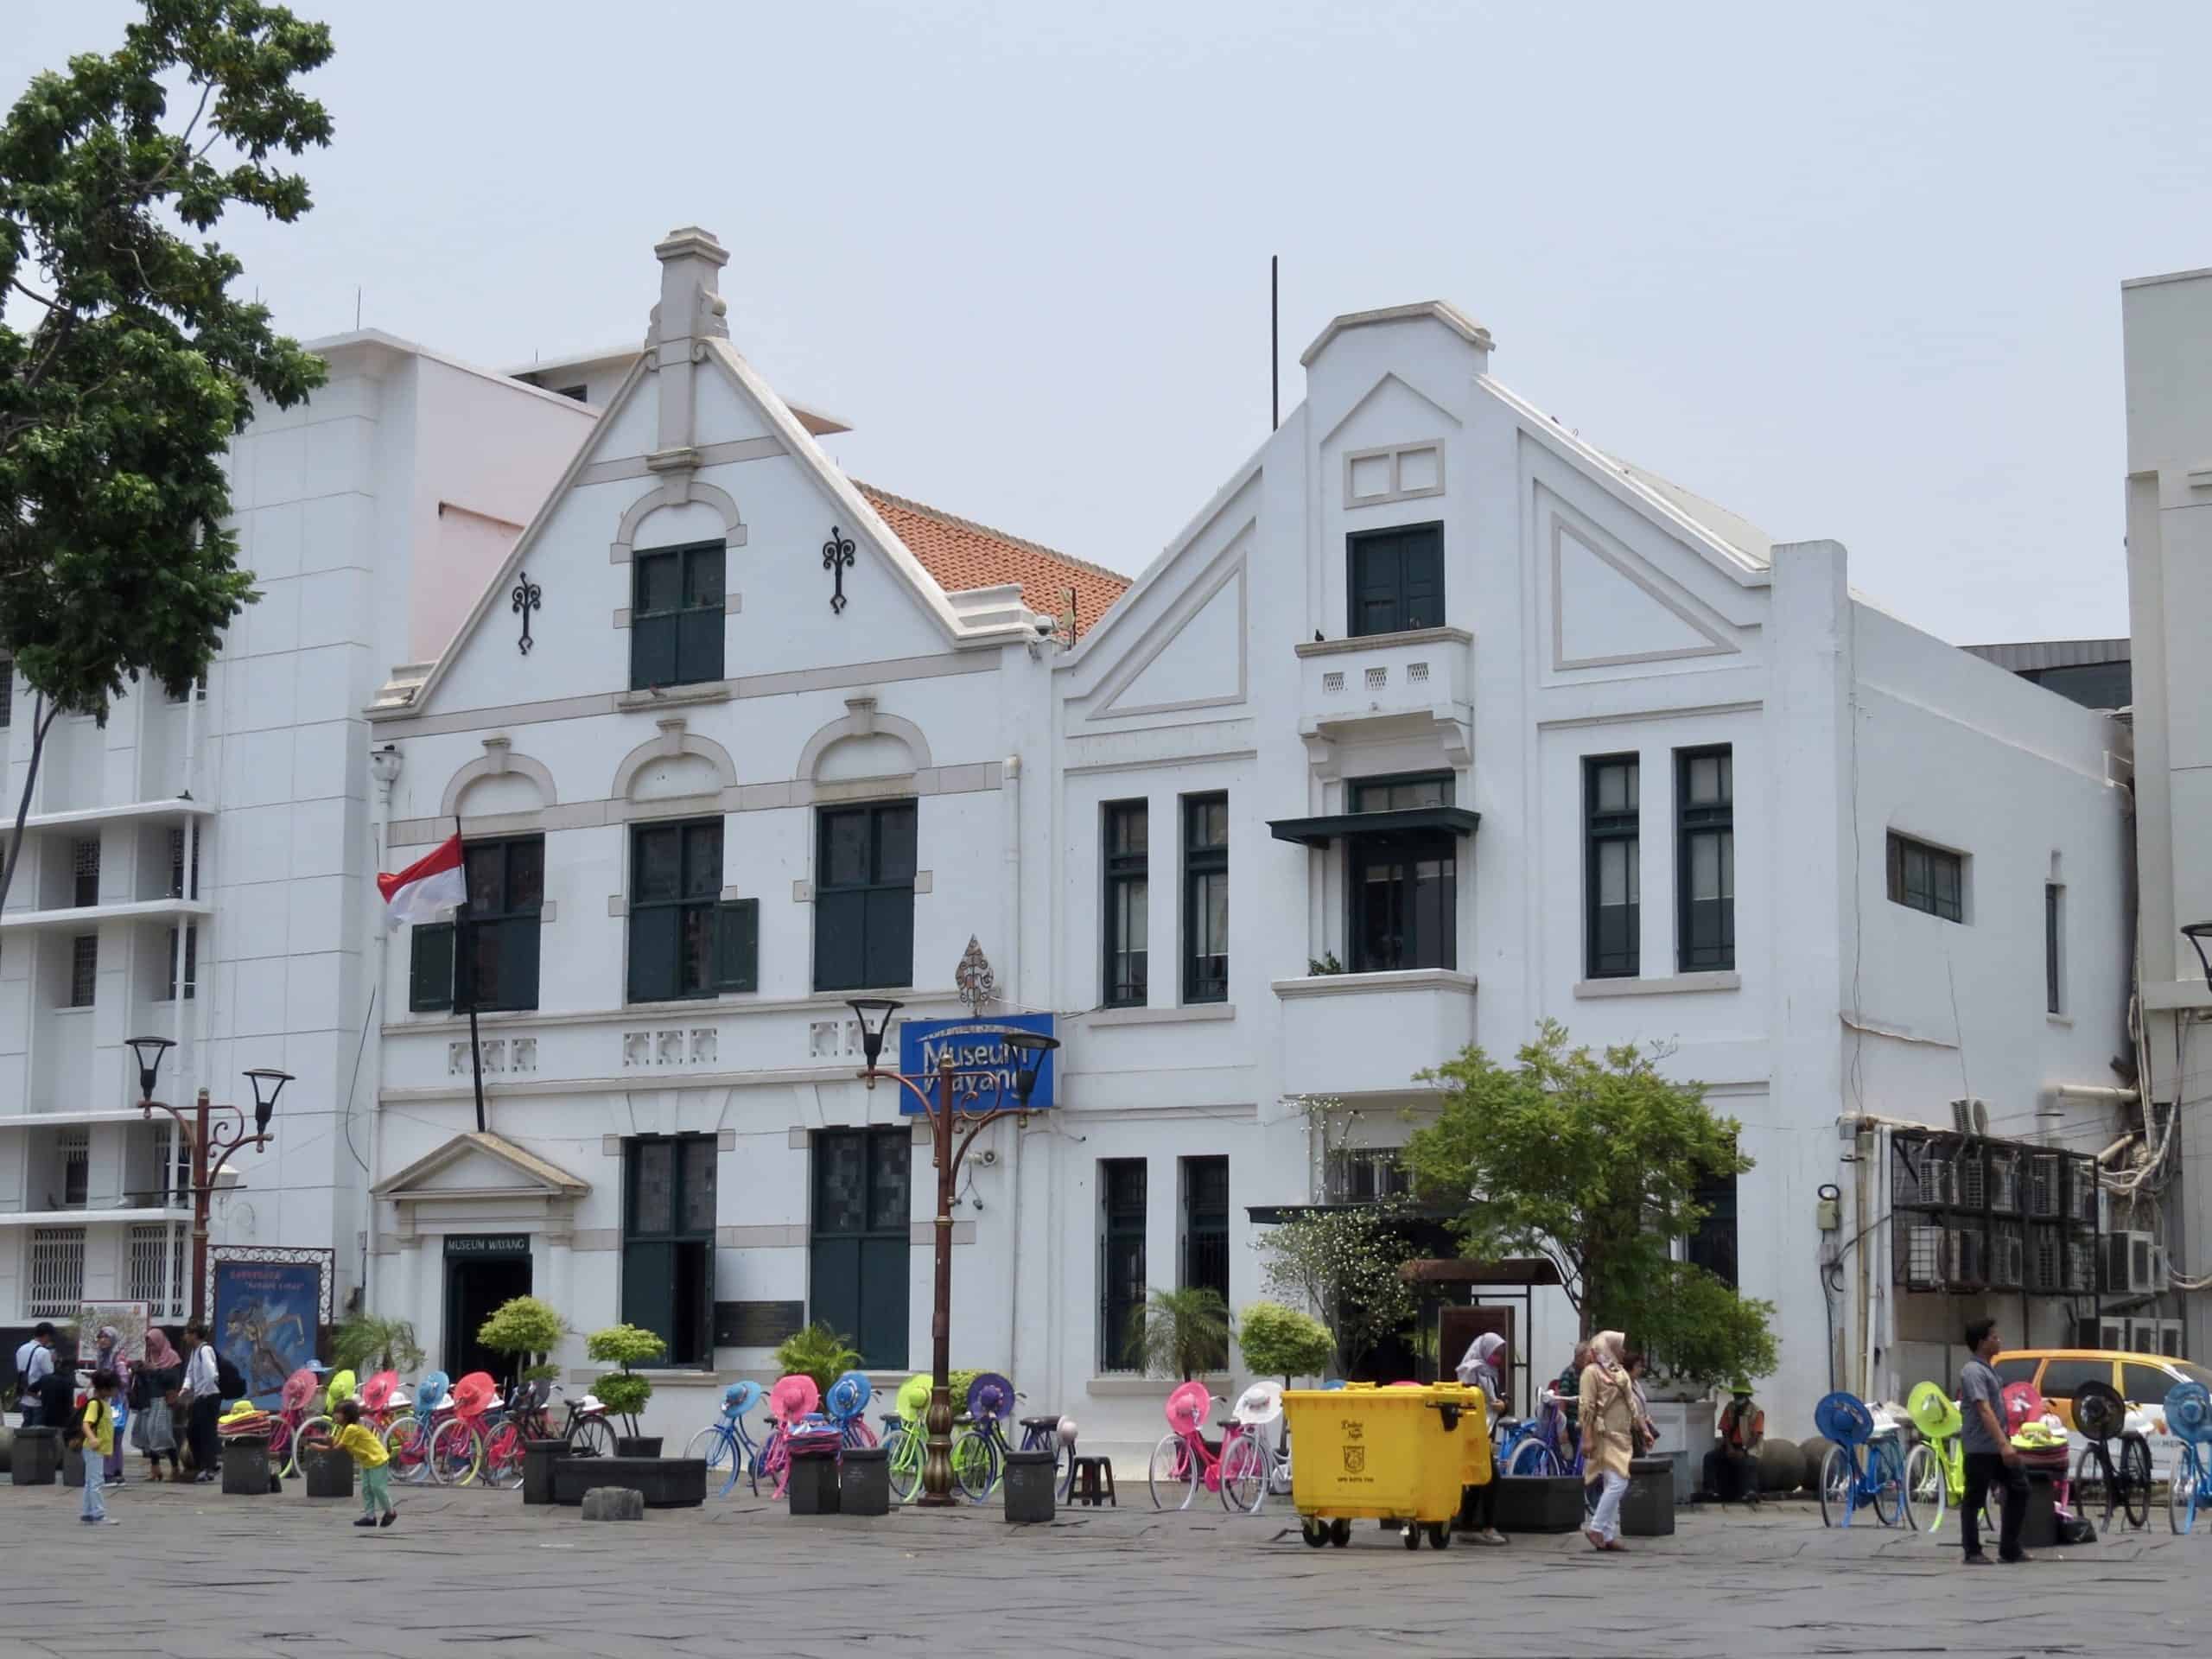 Jakarta’s old town, Kota Tua or Old Bavaria, centers around Fatahillah Square